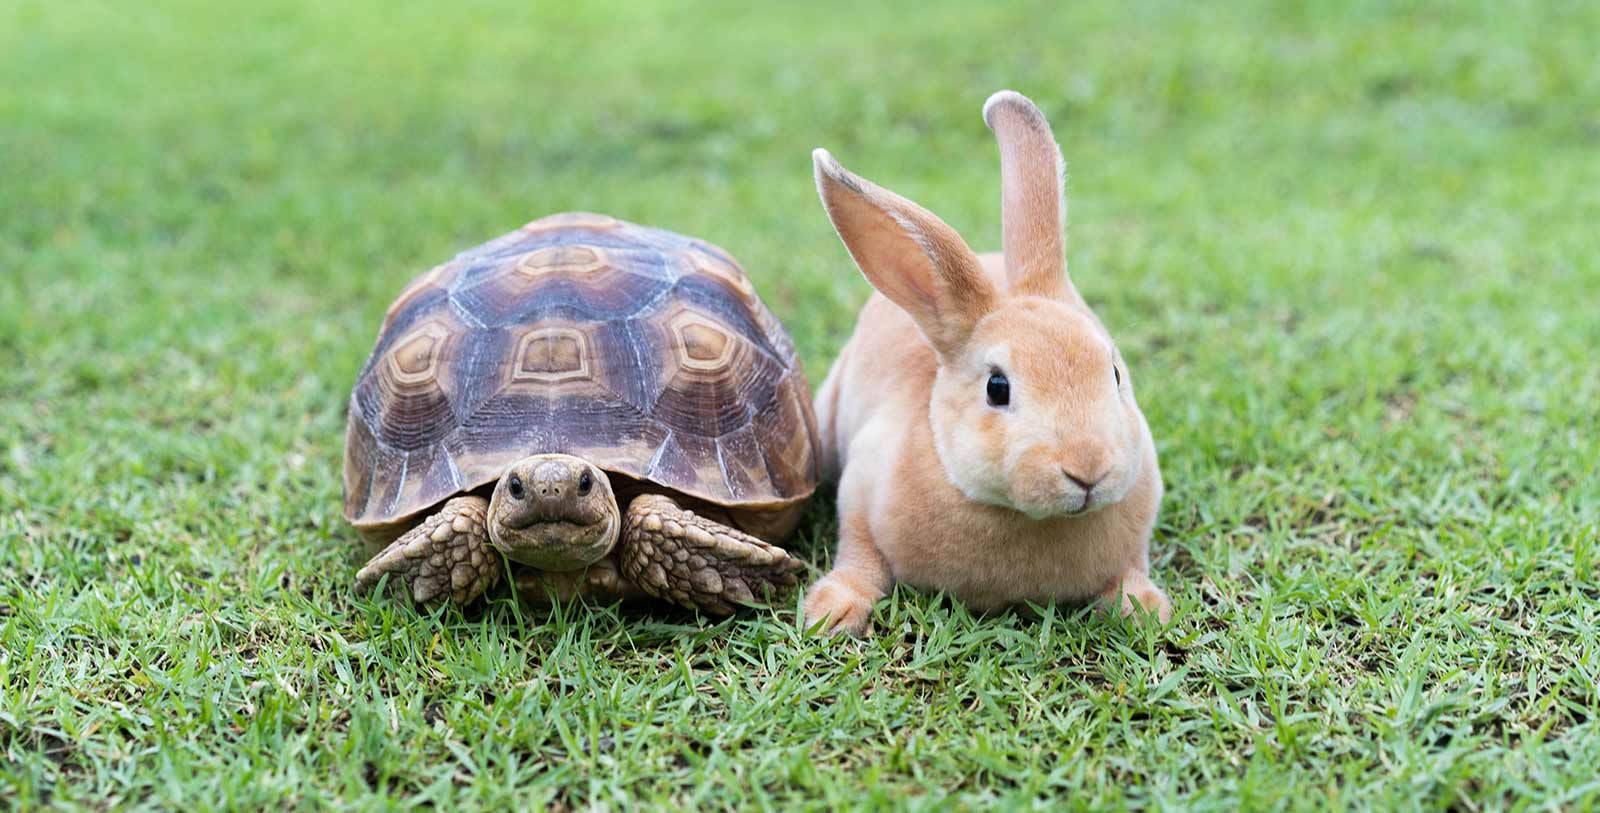 Tortoise & Hare